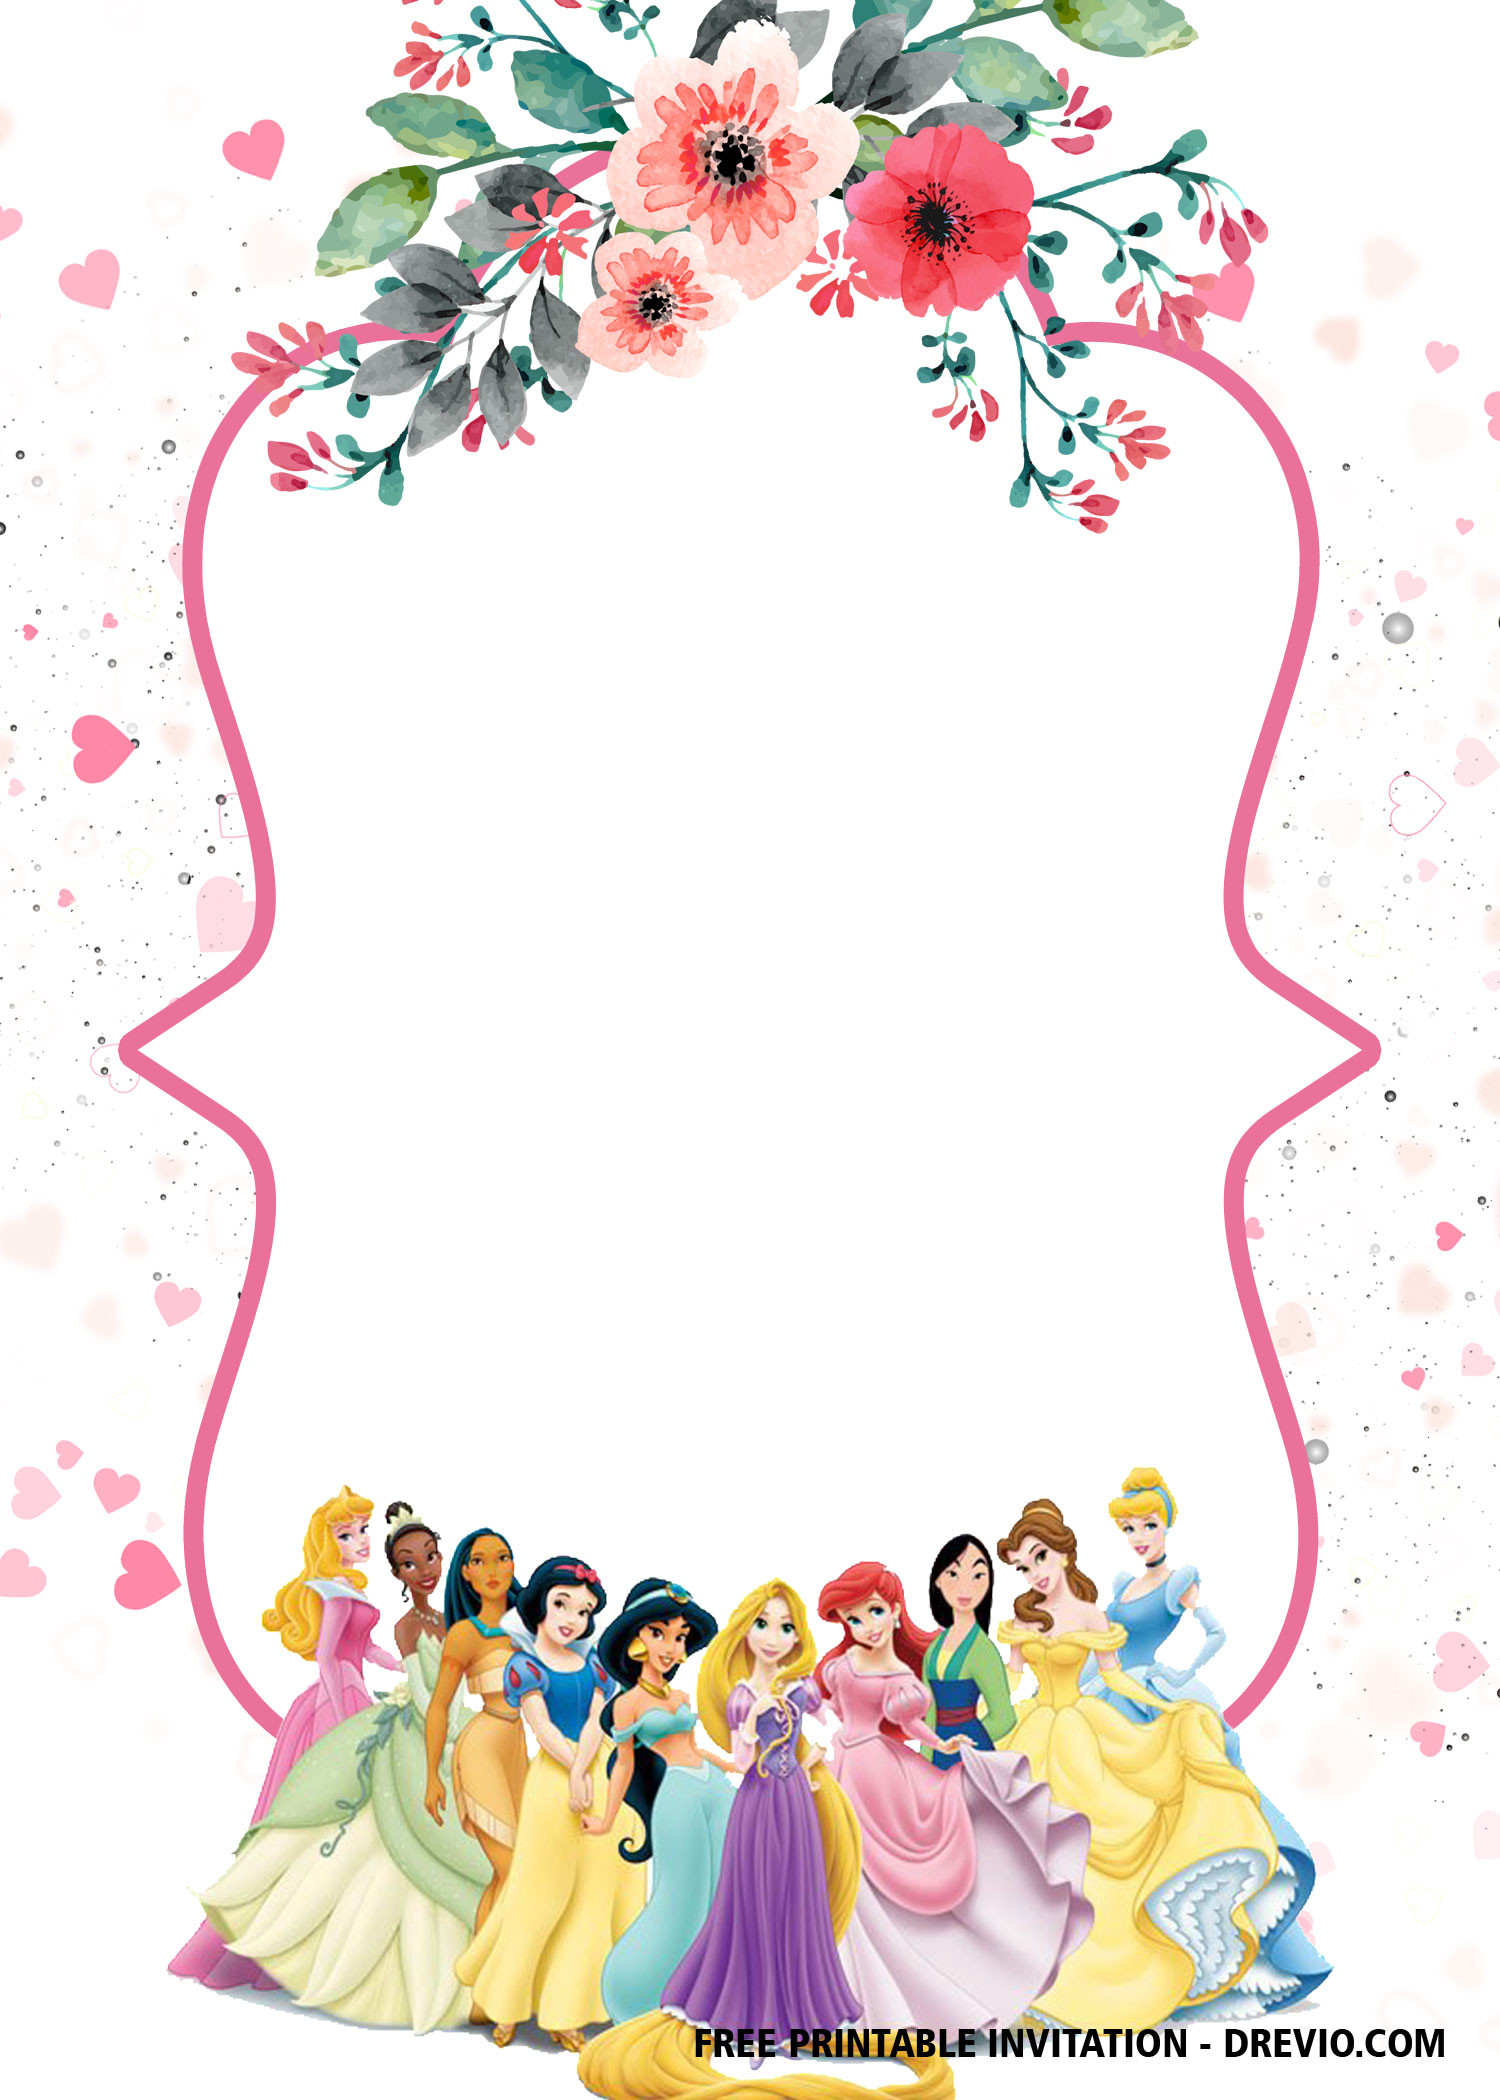 Disney Princess Birthday Party Invitations
 FREE Disney Princess Invitation Template for Your Little